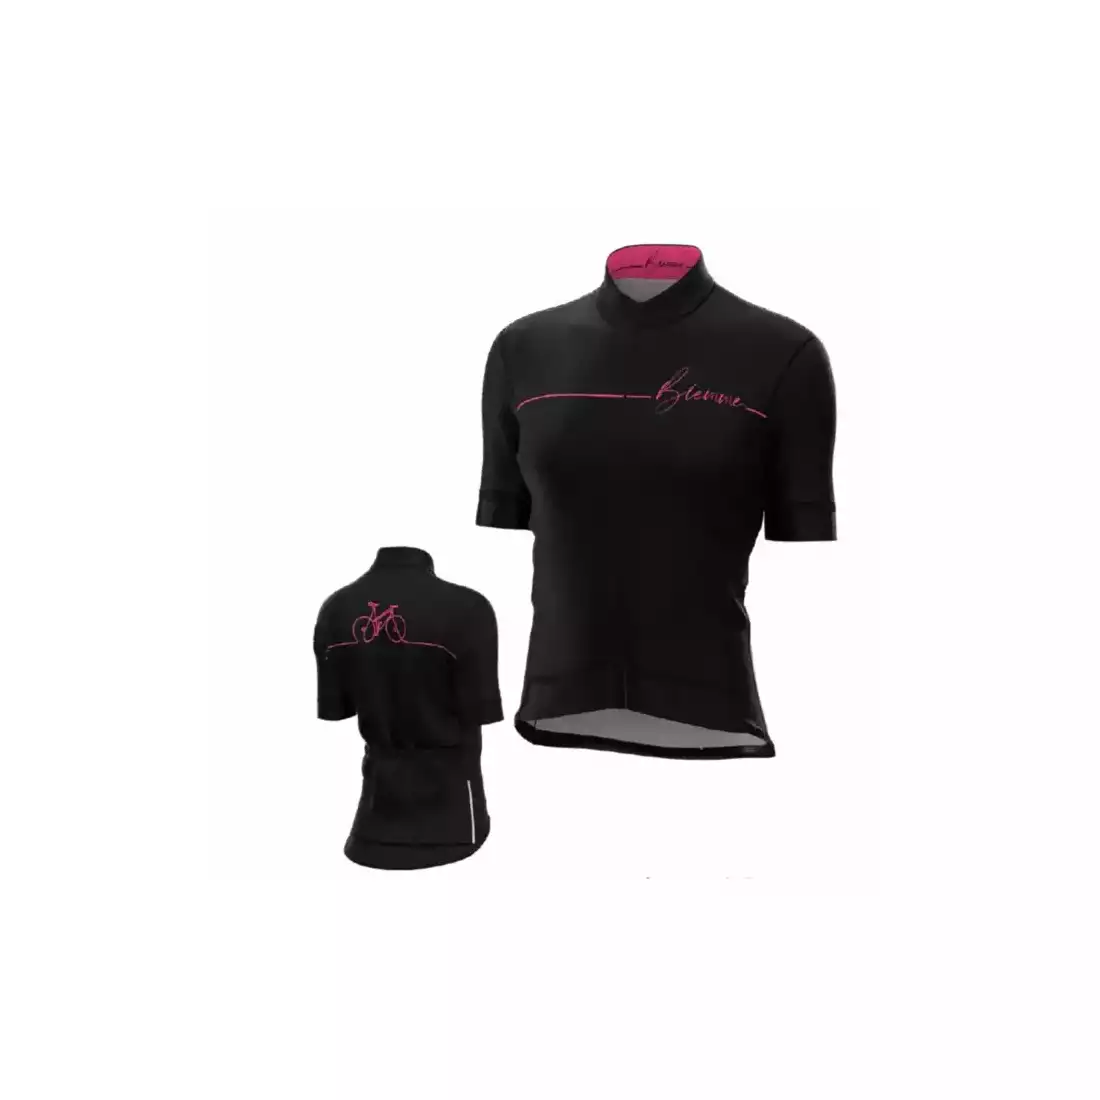 Biemme BIKE dámský cyklistický dres, černá a růžová